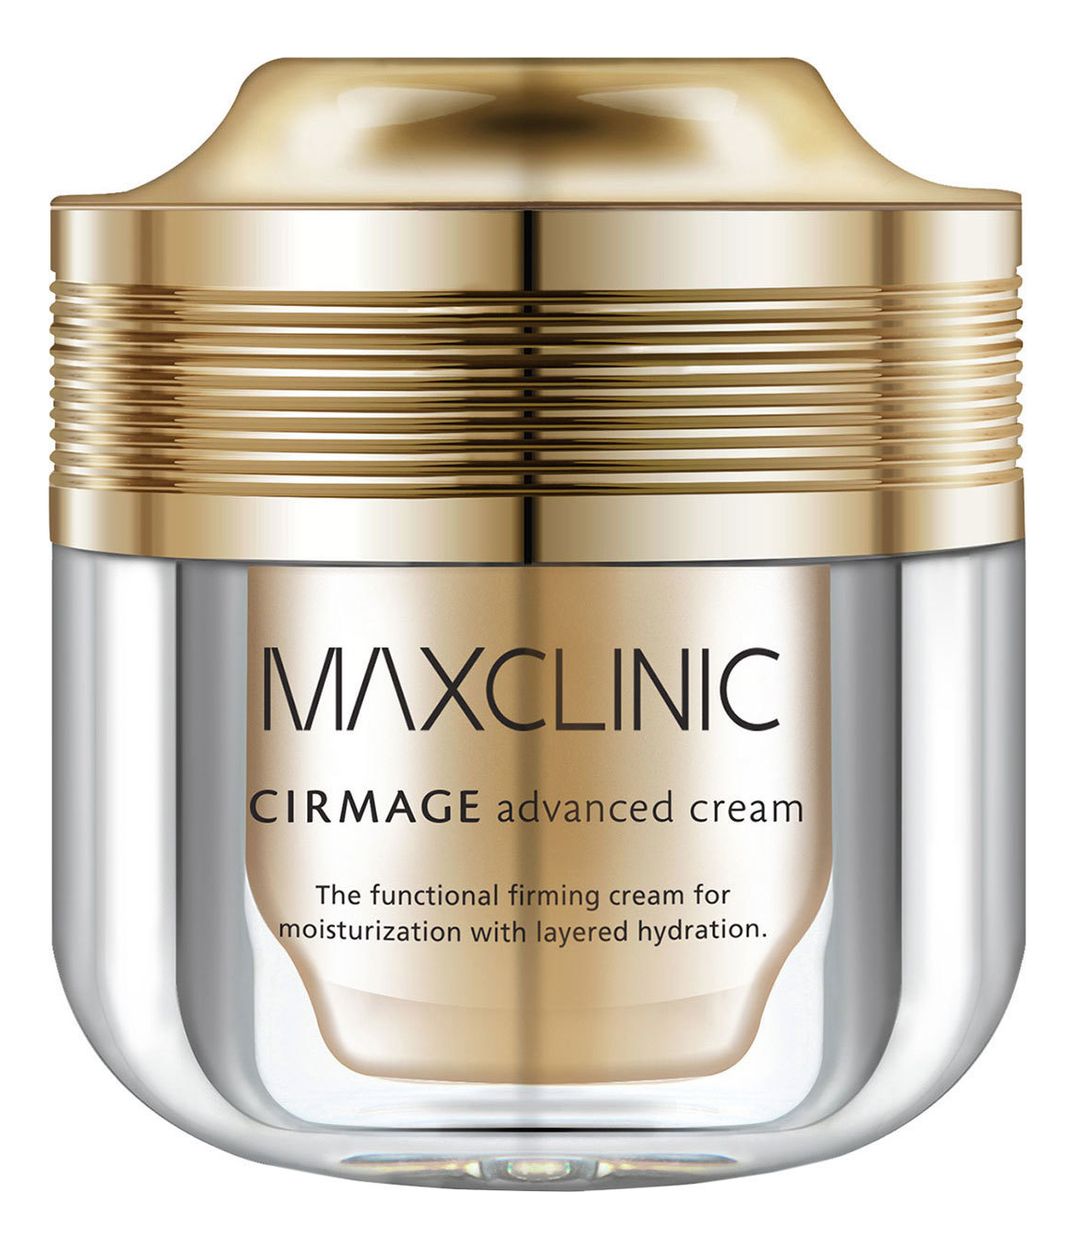 Aнтивозрастной крем для лица Cirmage Advanced Cream 50мл